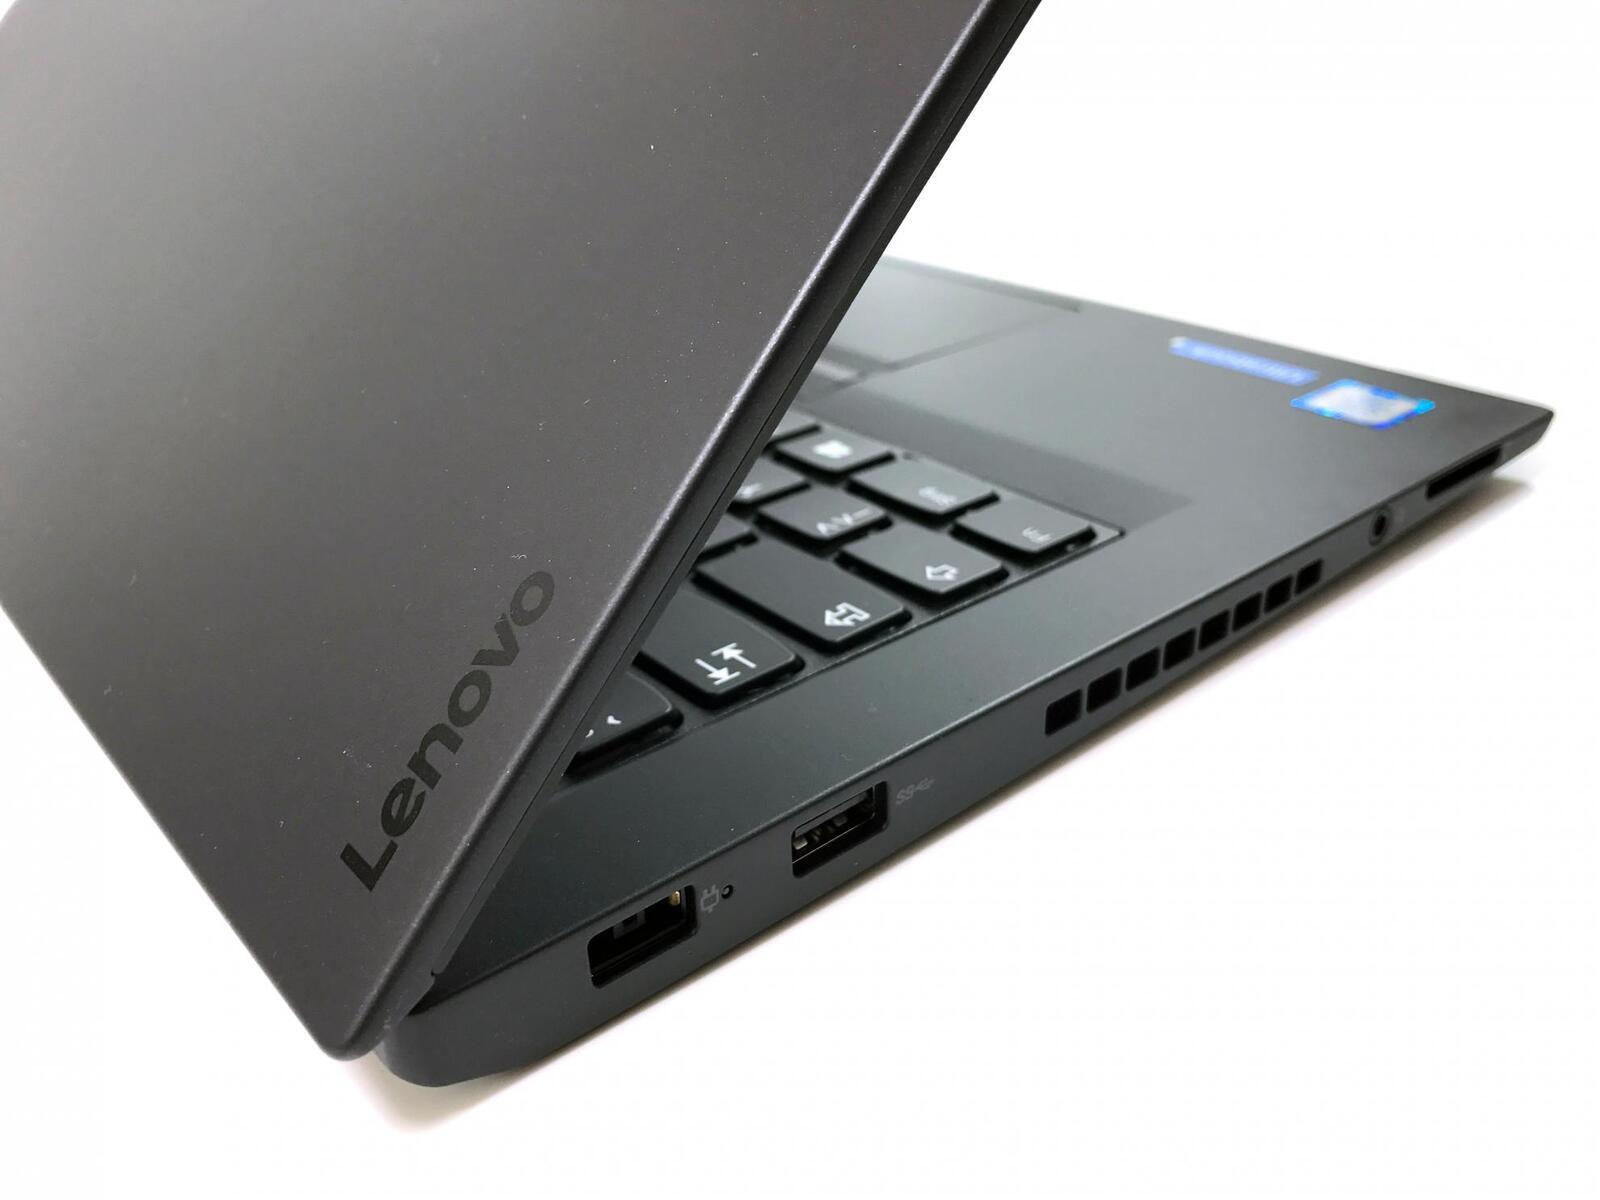 Lenovo ThinkPad T470s Intel i5 6300U 2.40GHz 12GB RAM 128GB SSD 14" FHD Win 10 - B Grade Image 2